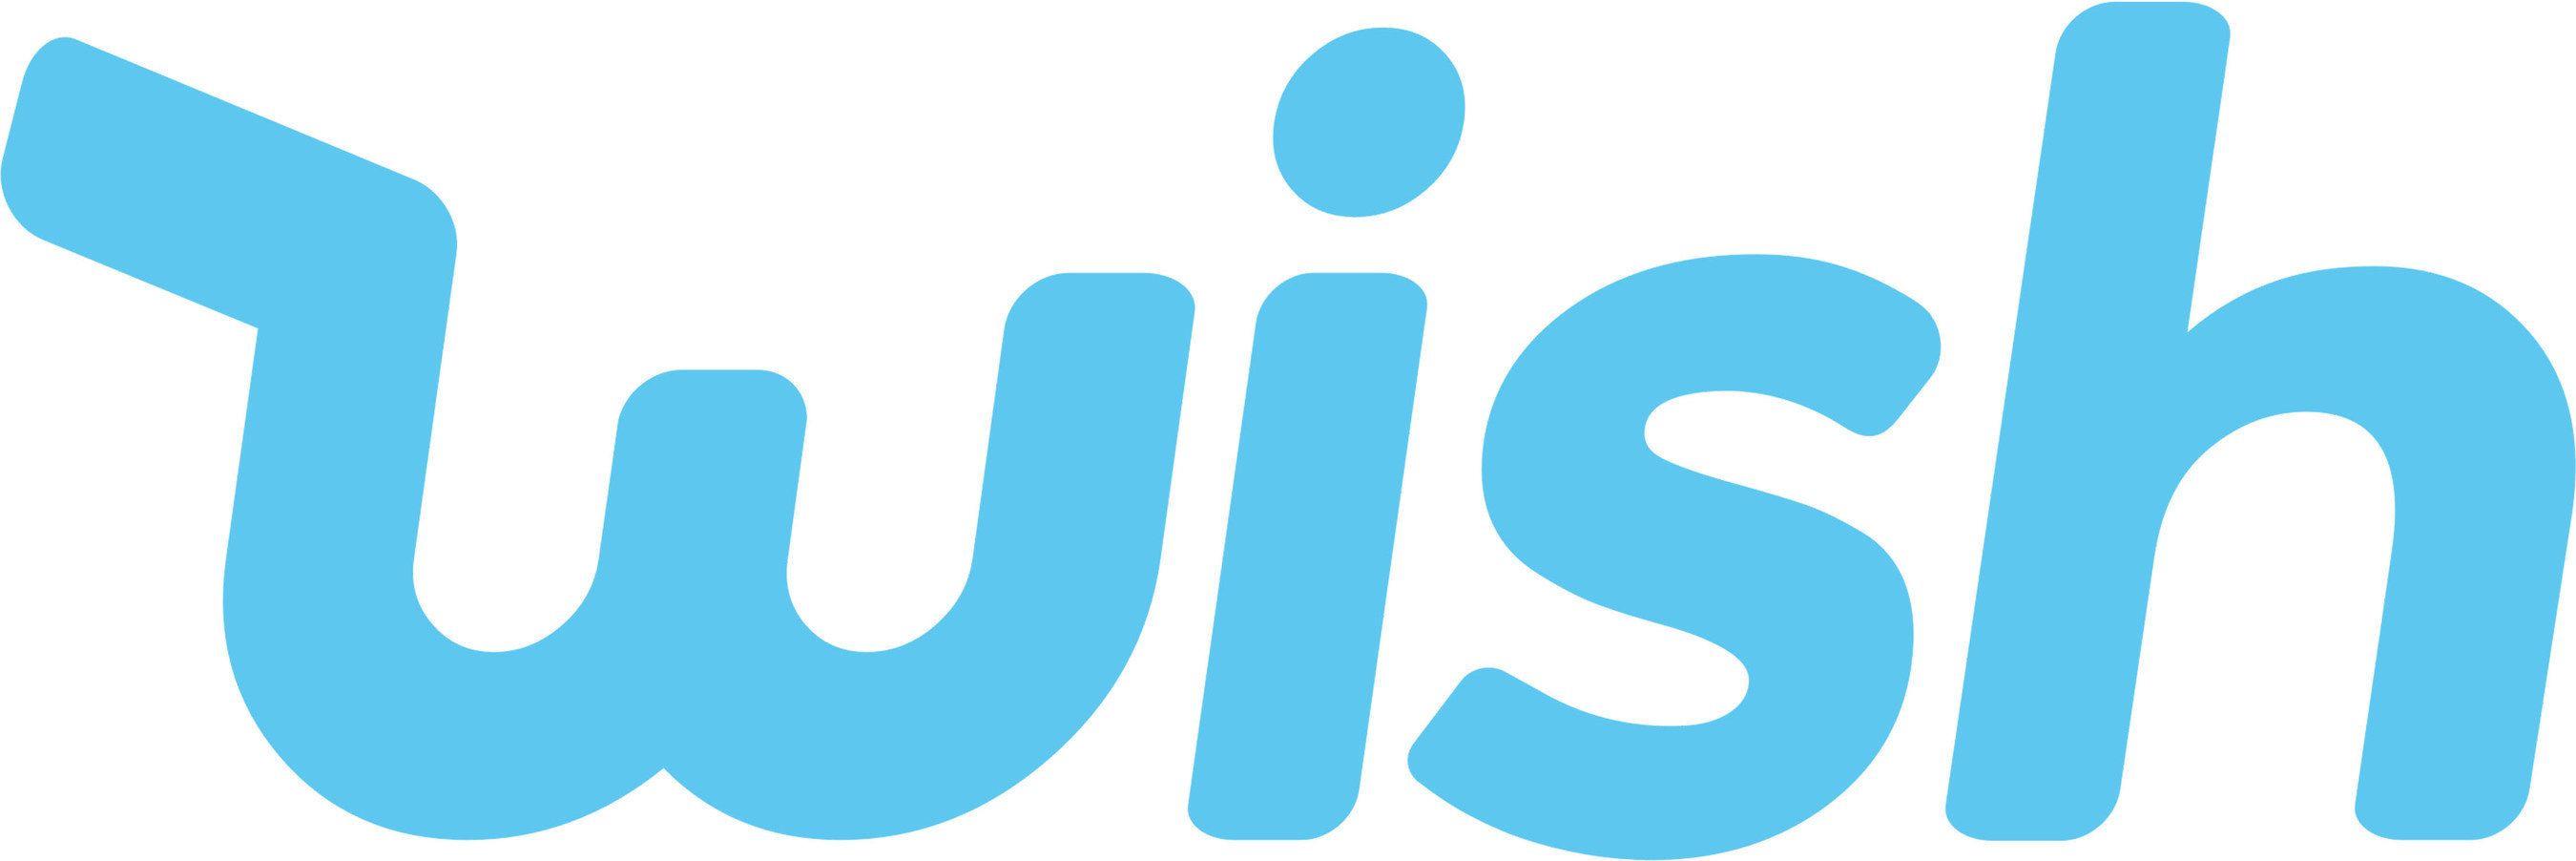 Wish.com Logo - Leading Mobile Commerce Platform, Wish, Acquires Locket